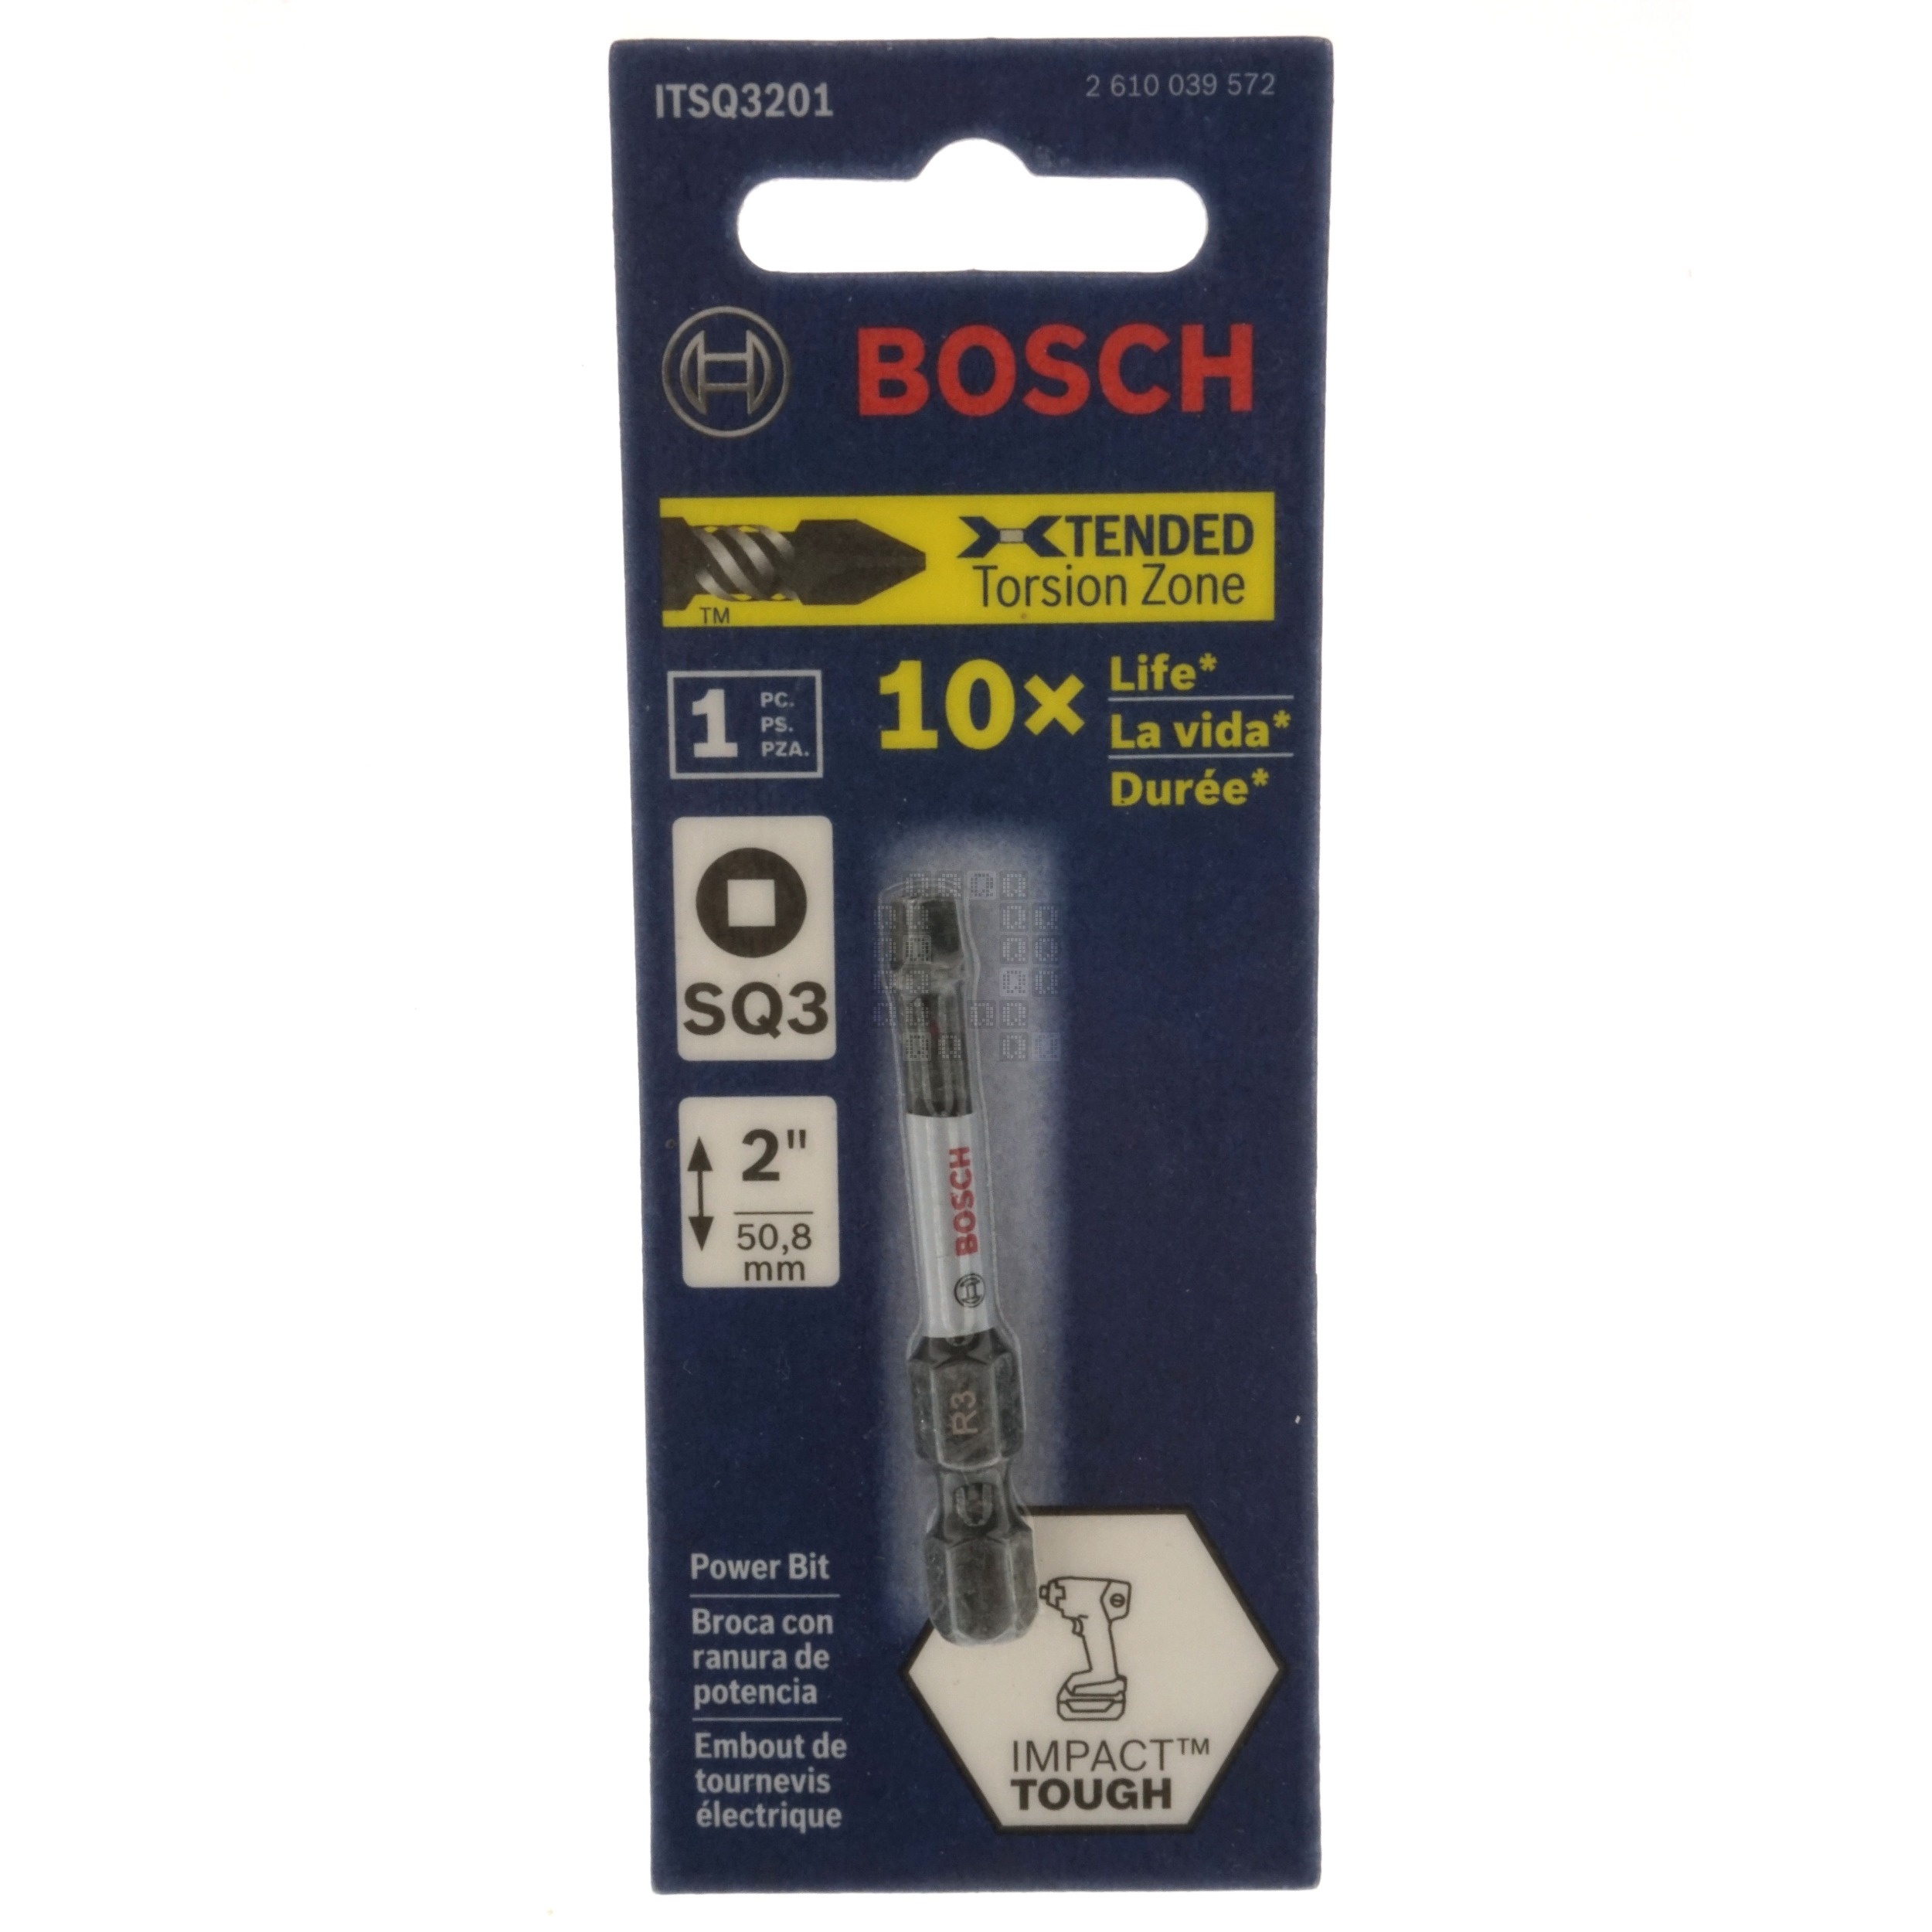 Bosch ITSQ3201 Impact Tough SQ3 #3 Square Insert Power Bit, 2" Length, 2610039572